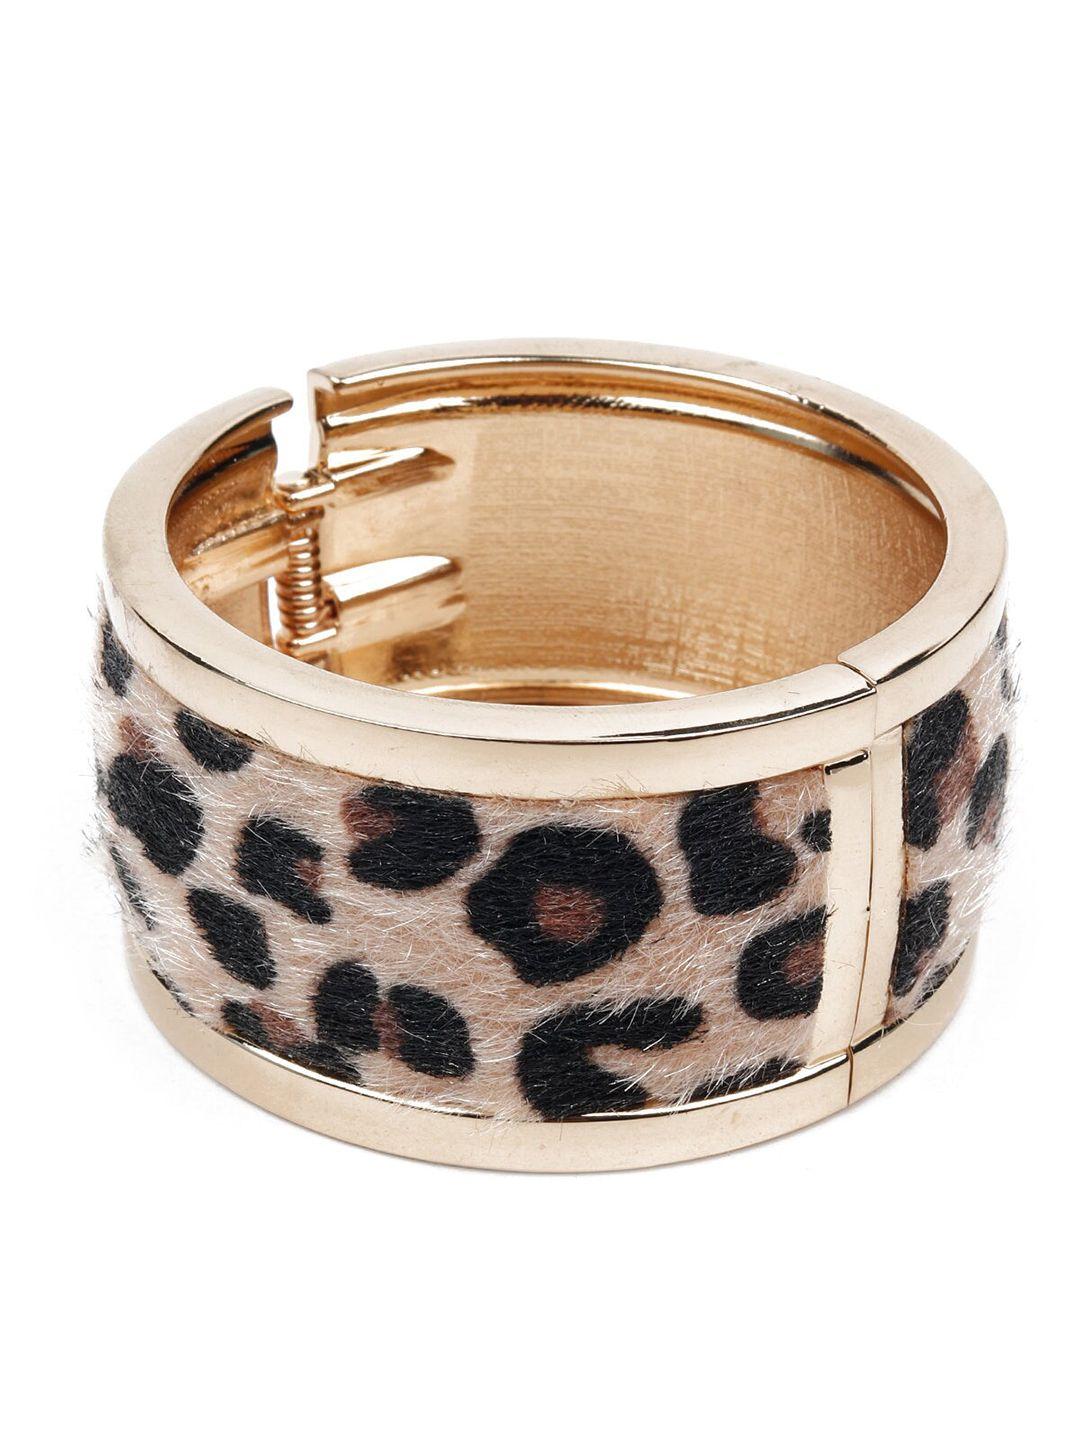 odette women gold-toned & black animal printed armlet bracelet